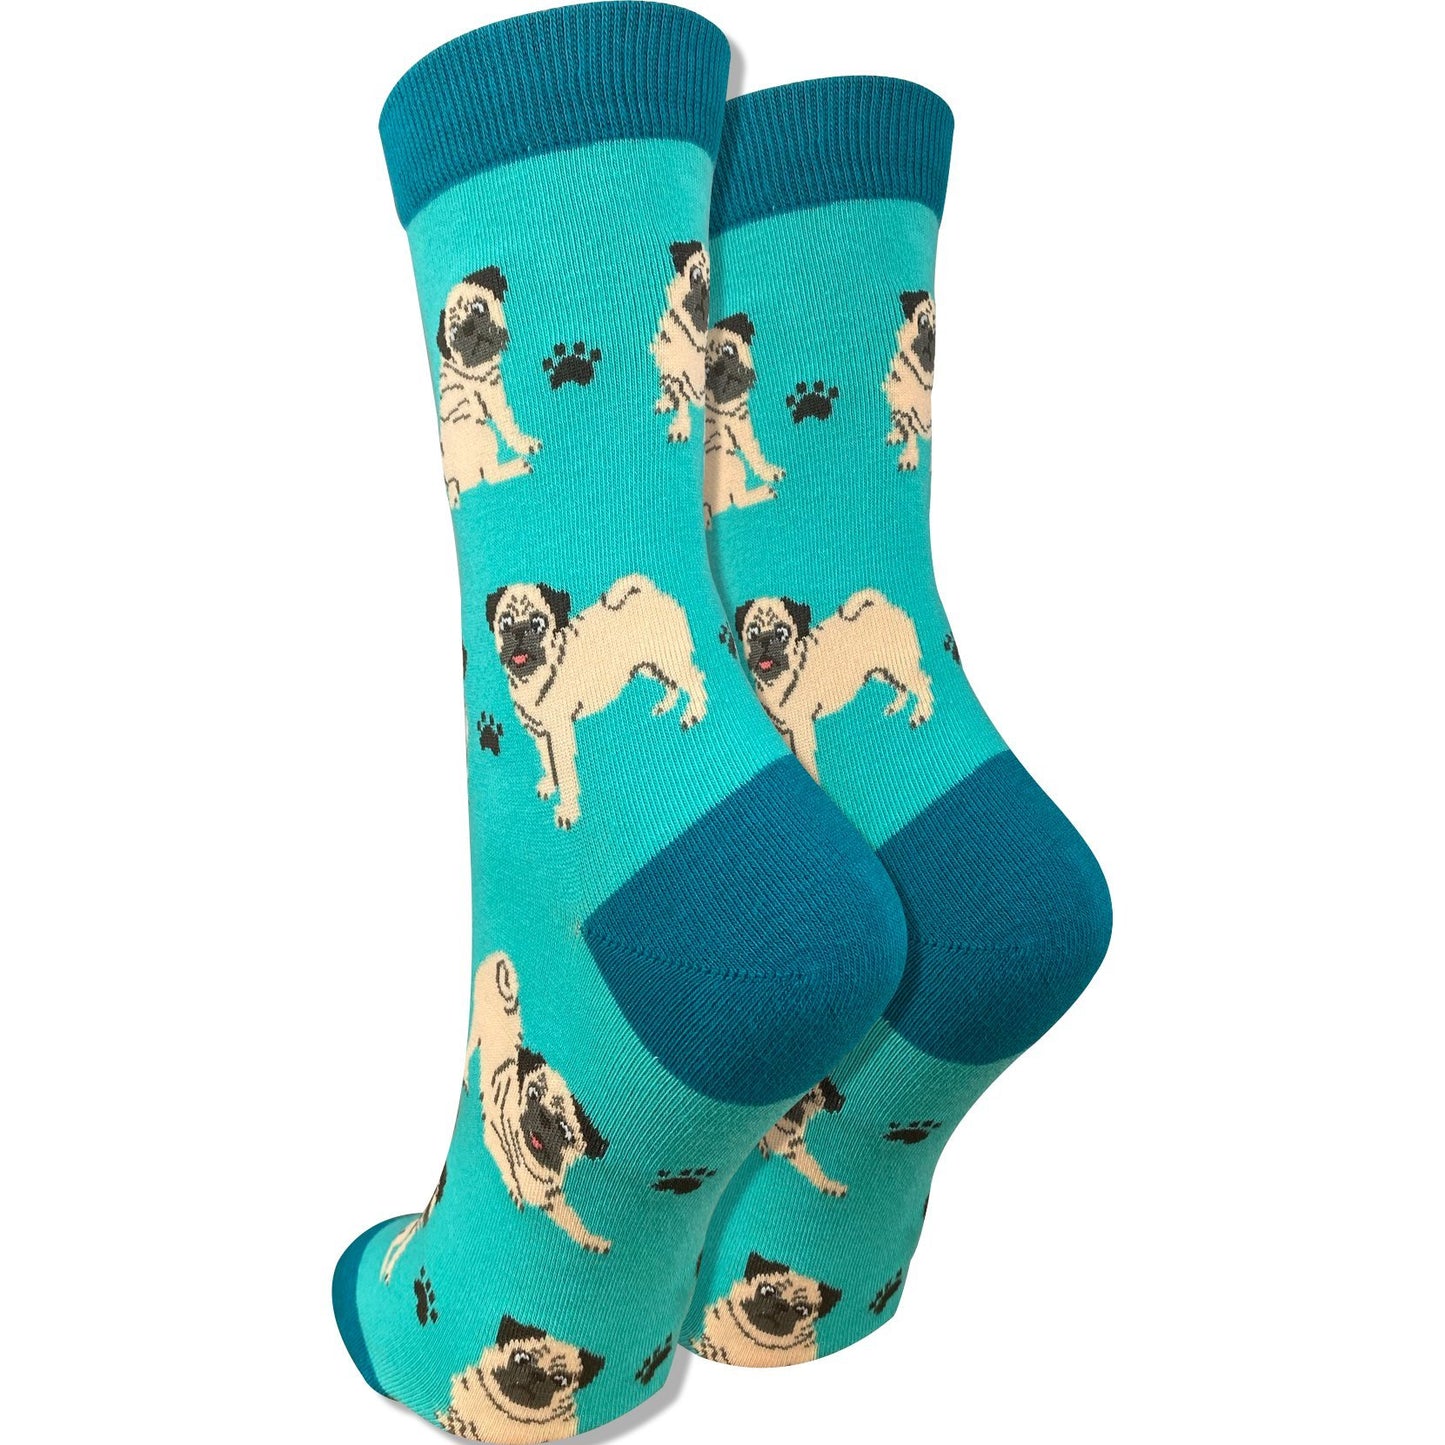 Pug Socks - Imagery Socks